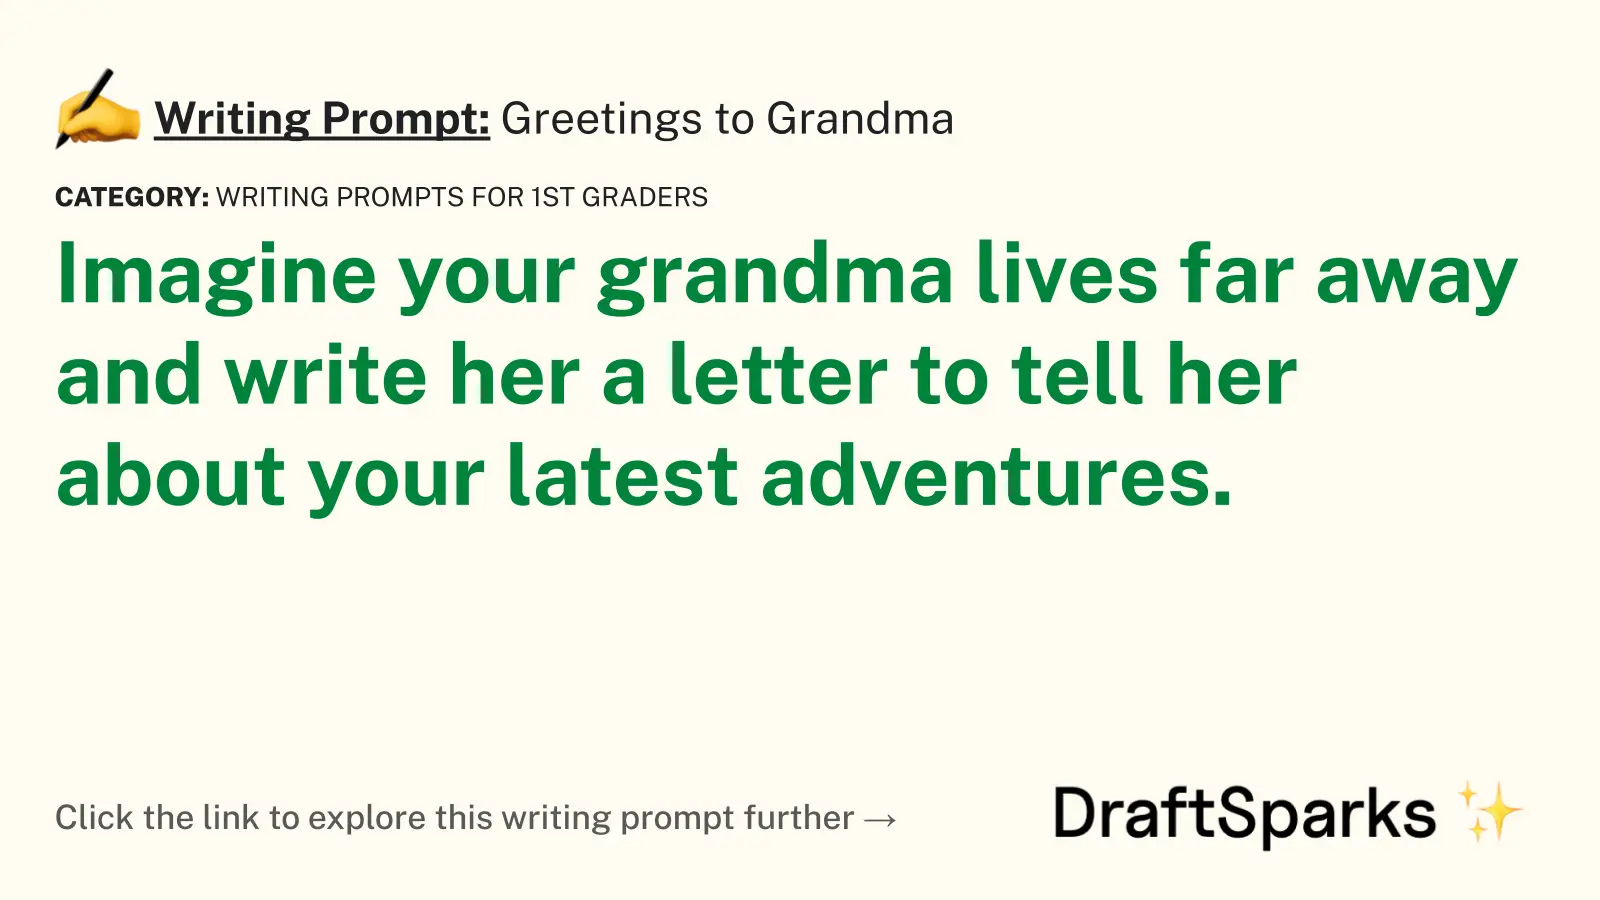 Greetings to Grandma